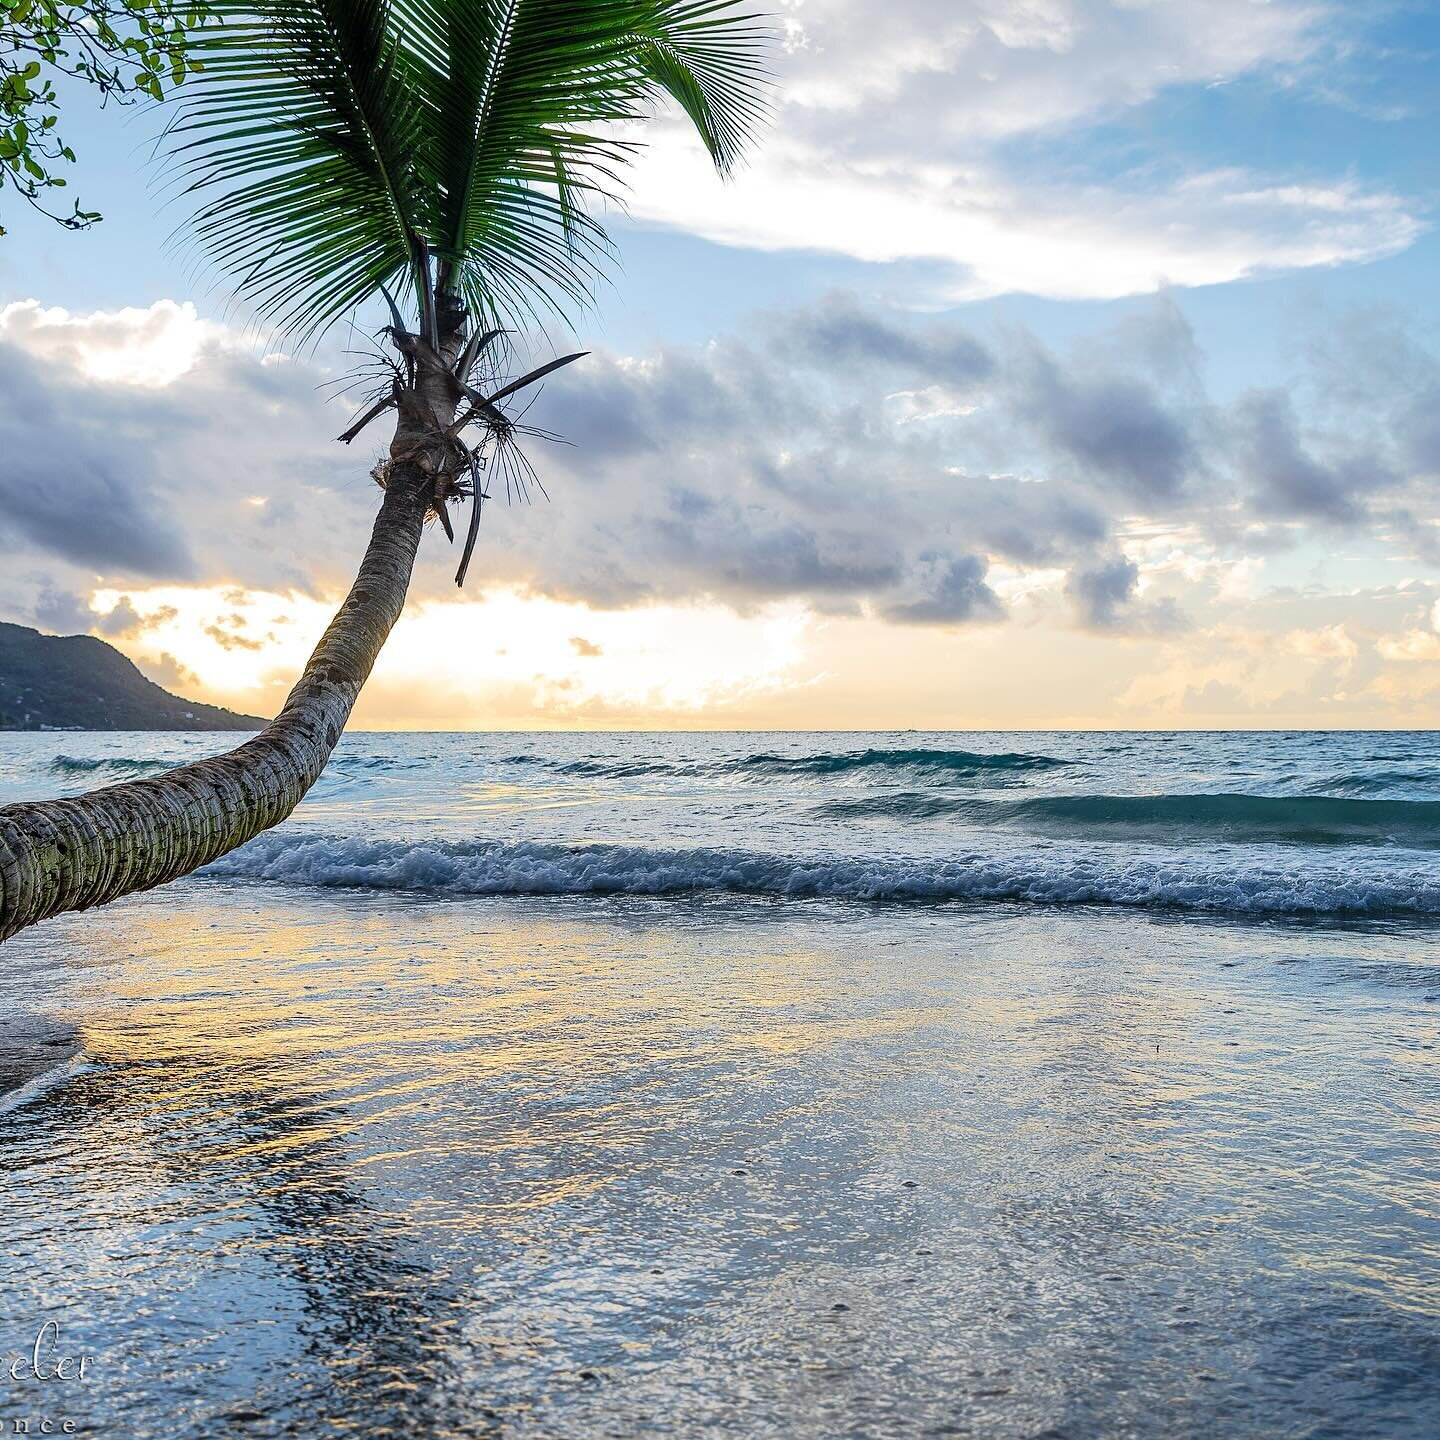 Reminiscent&hellip;
.
.
.
.
.
.
#beach #island #islandlife #sliceoflife #sliceoffreedom #summertime #sandy #mahe #seychelles #travel #aroundtheworld #photography #cloudporn #sky #tropical #aglobalstroll